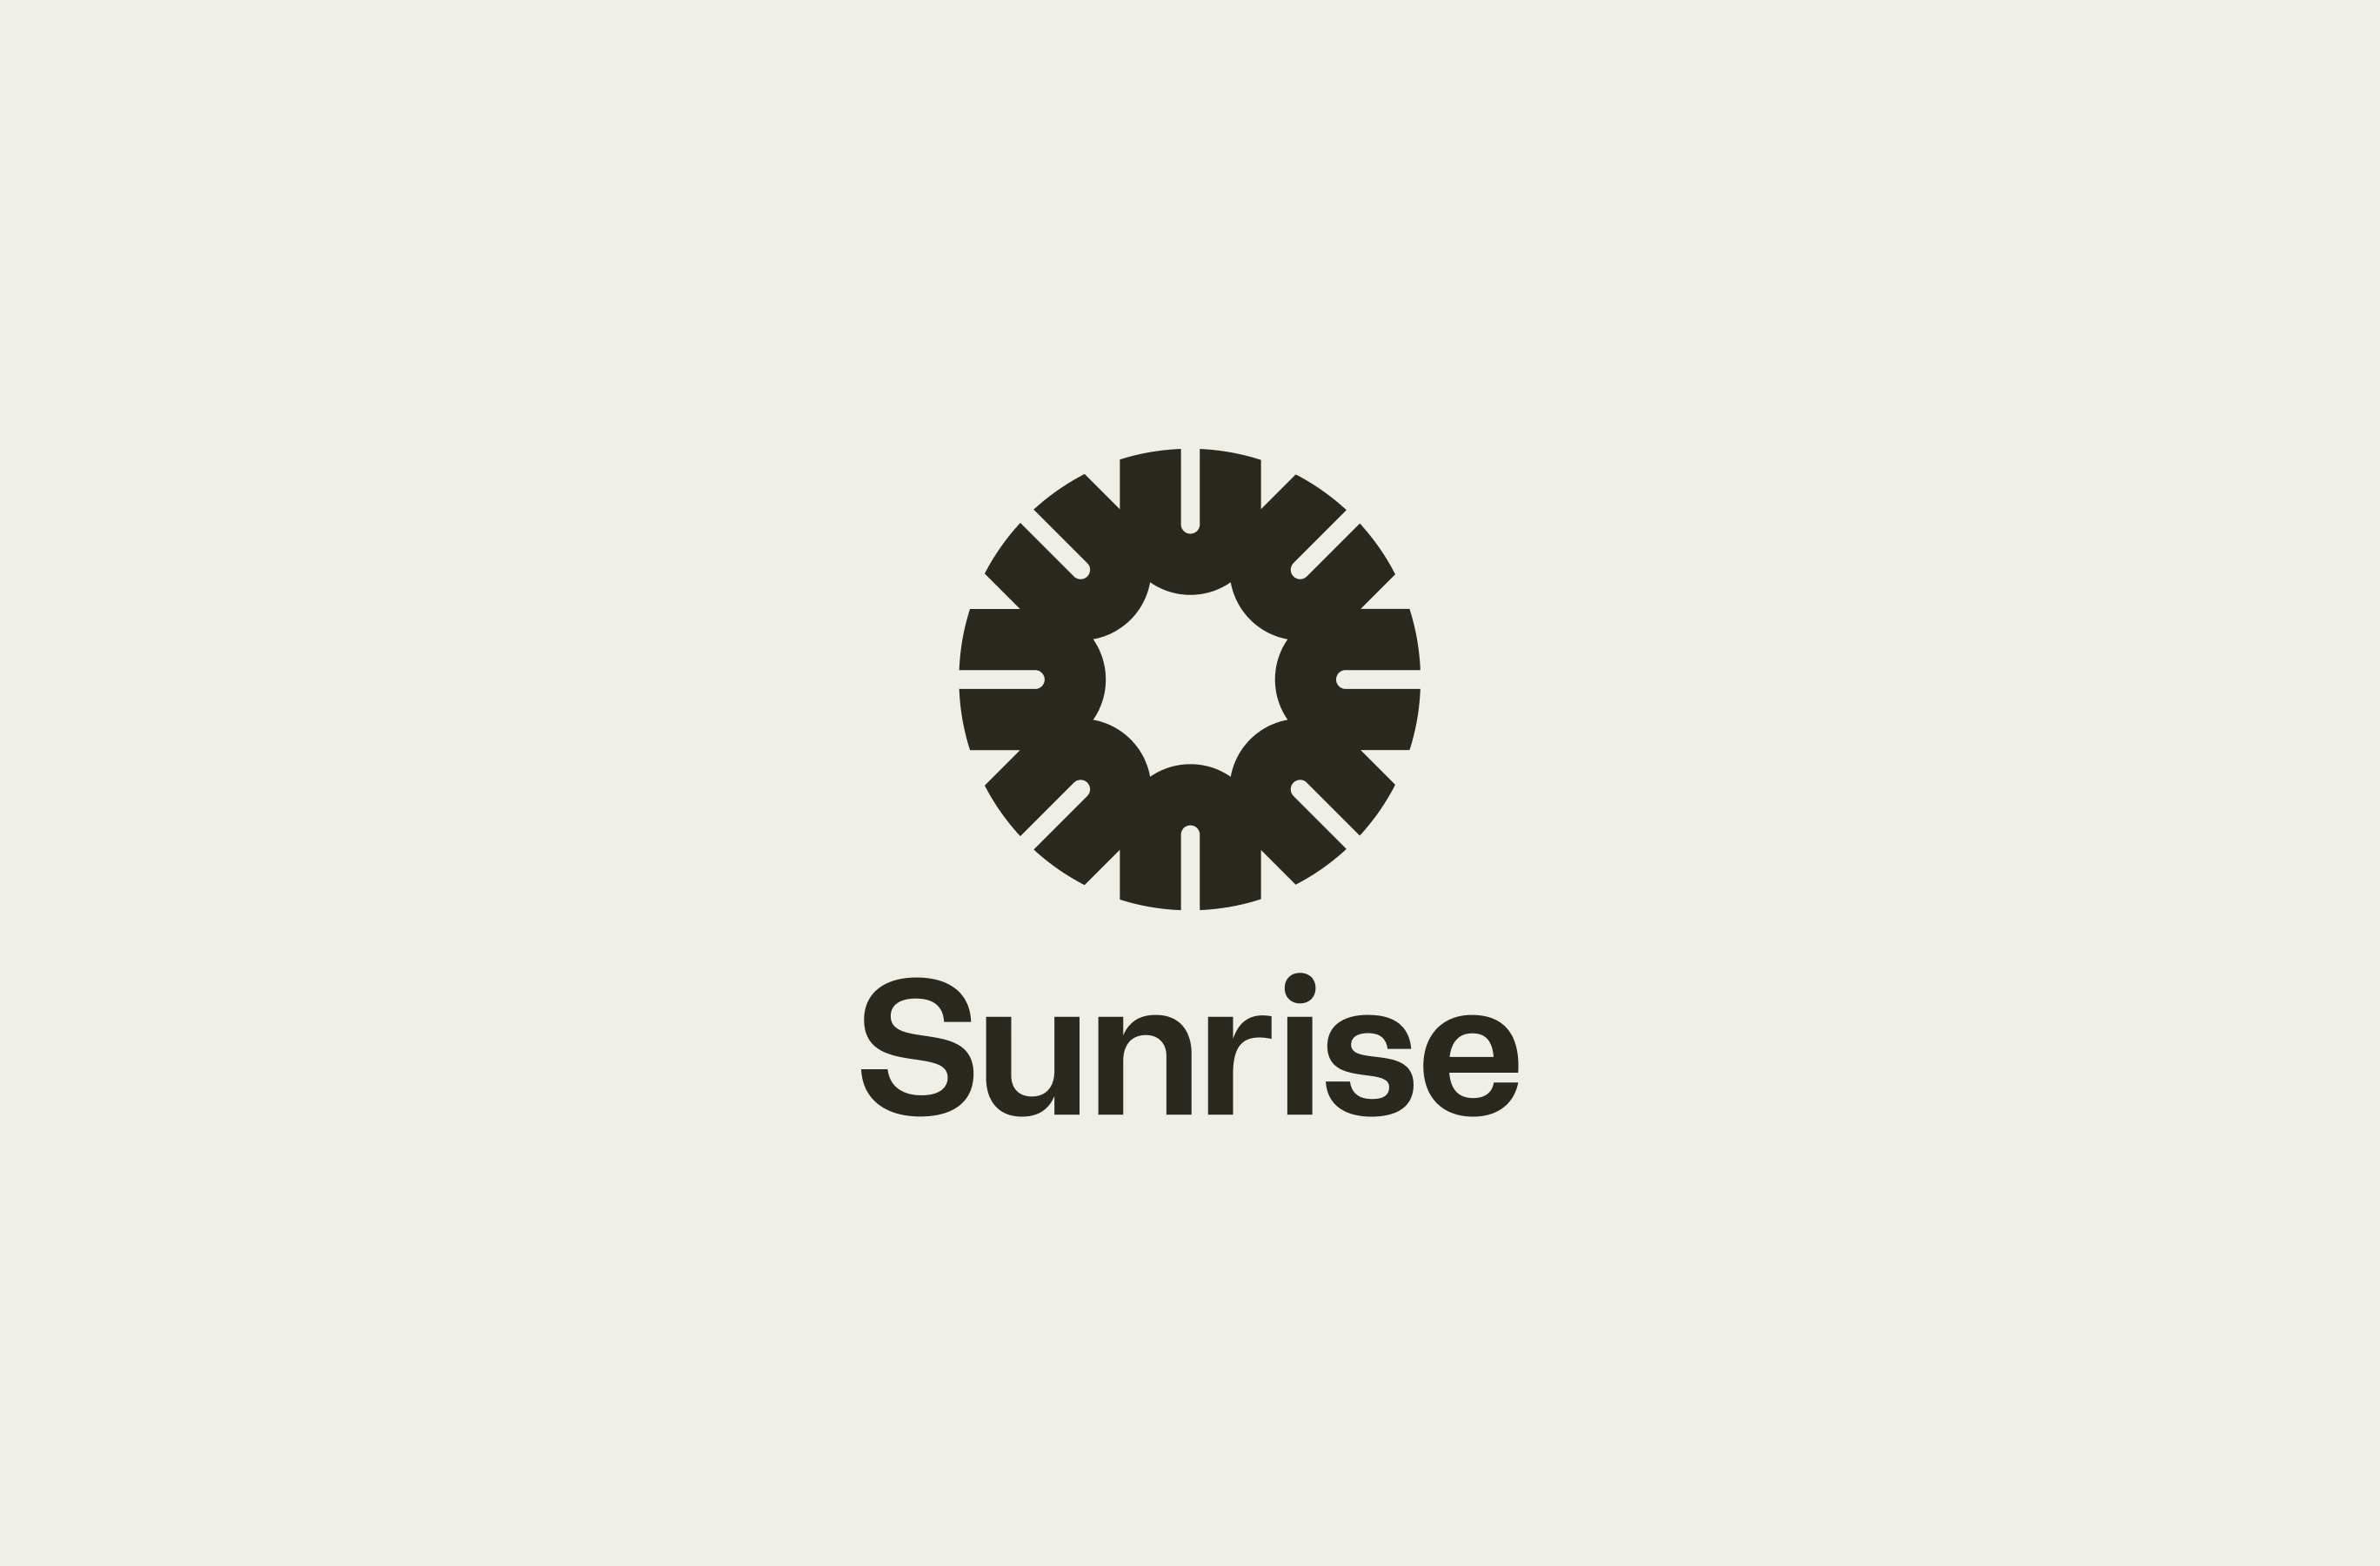 Sunrise identity design